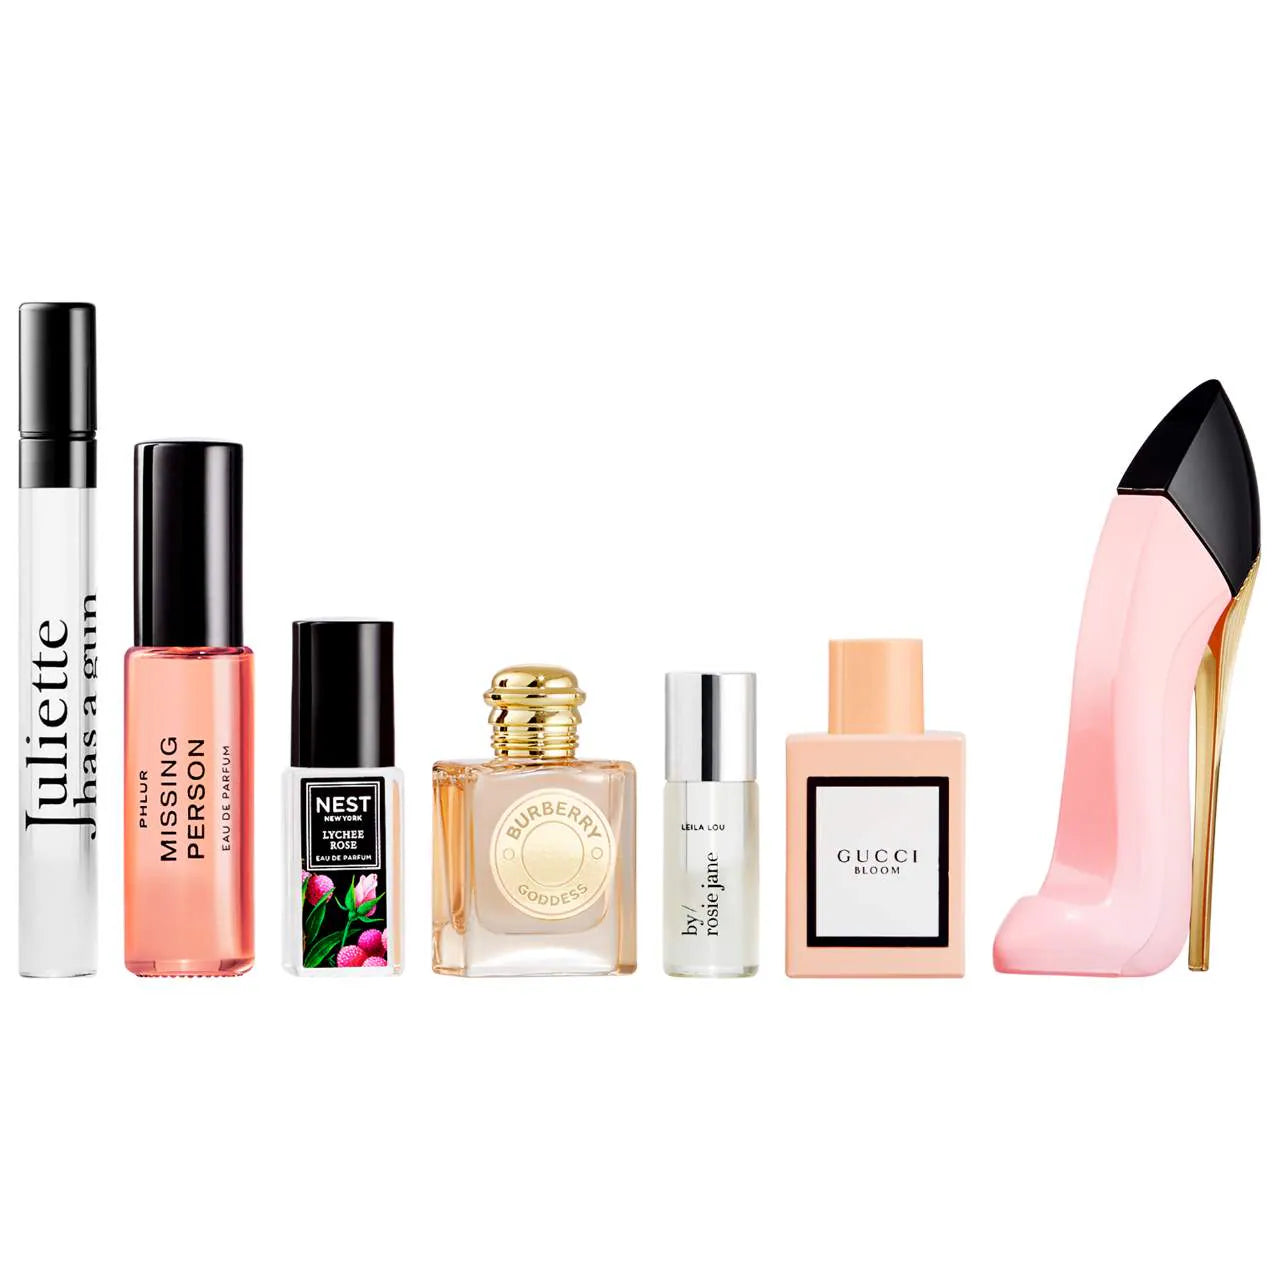 Pre Venta: Sephora Favorites | Deluxe Best-Selling Mini Perfume Sampler Set